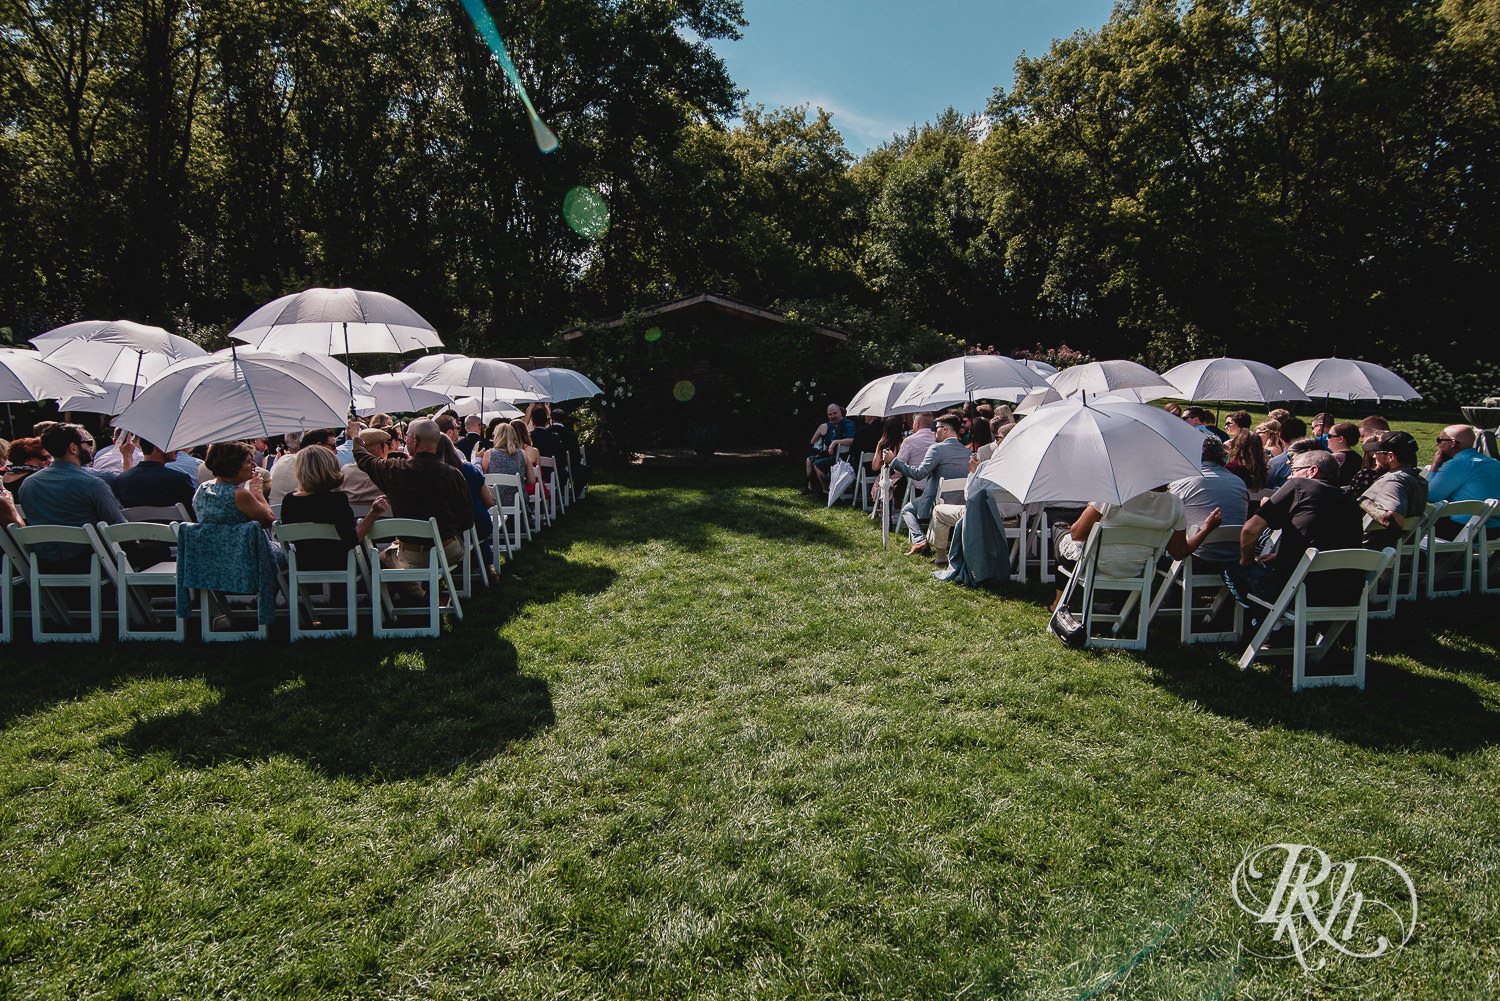 Guests smile under umbrellas before wedding ceremony at Camrose Hill Flower Farm in Stillwater, Minnesota.